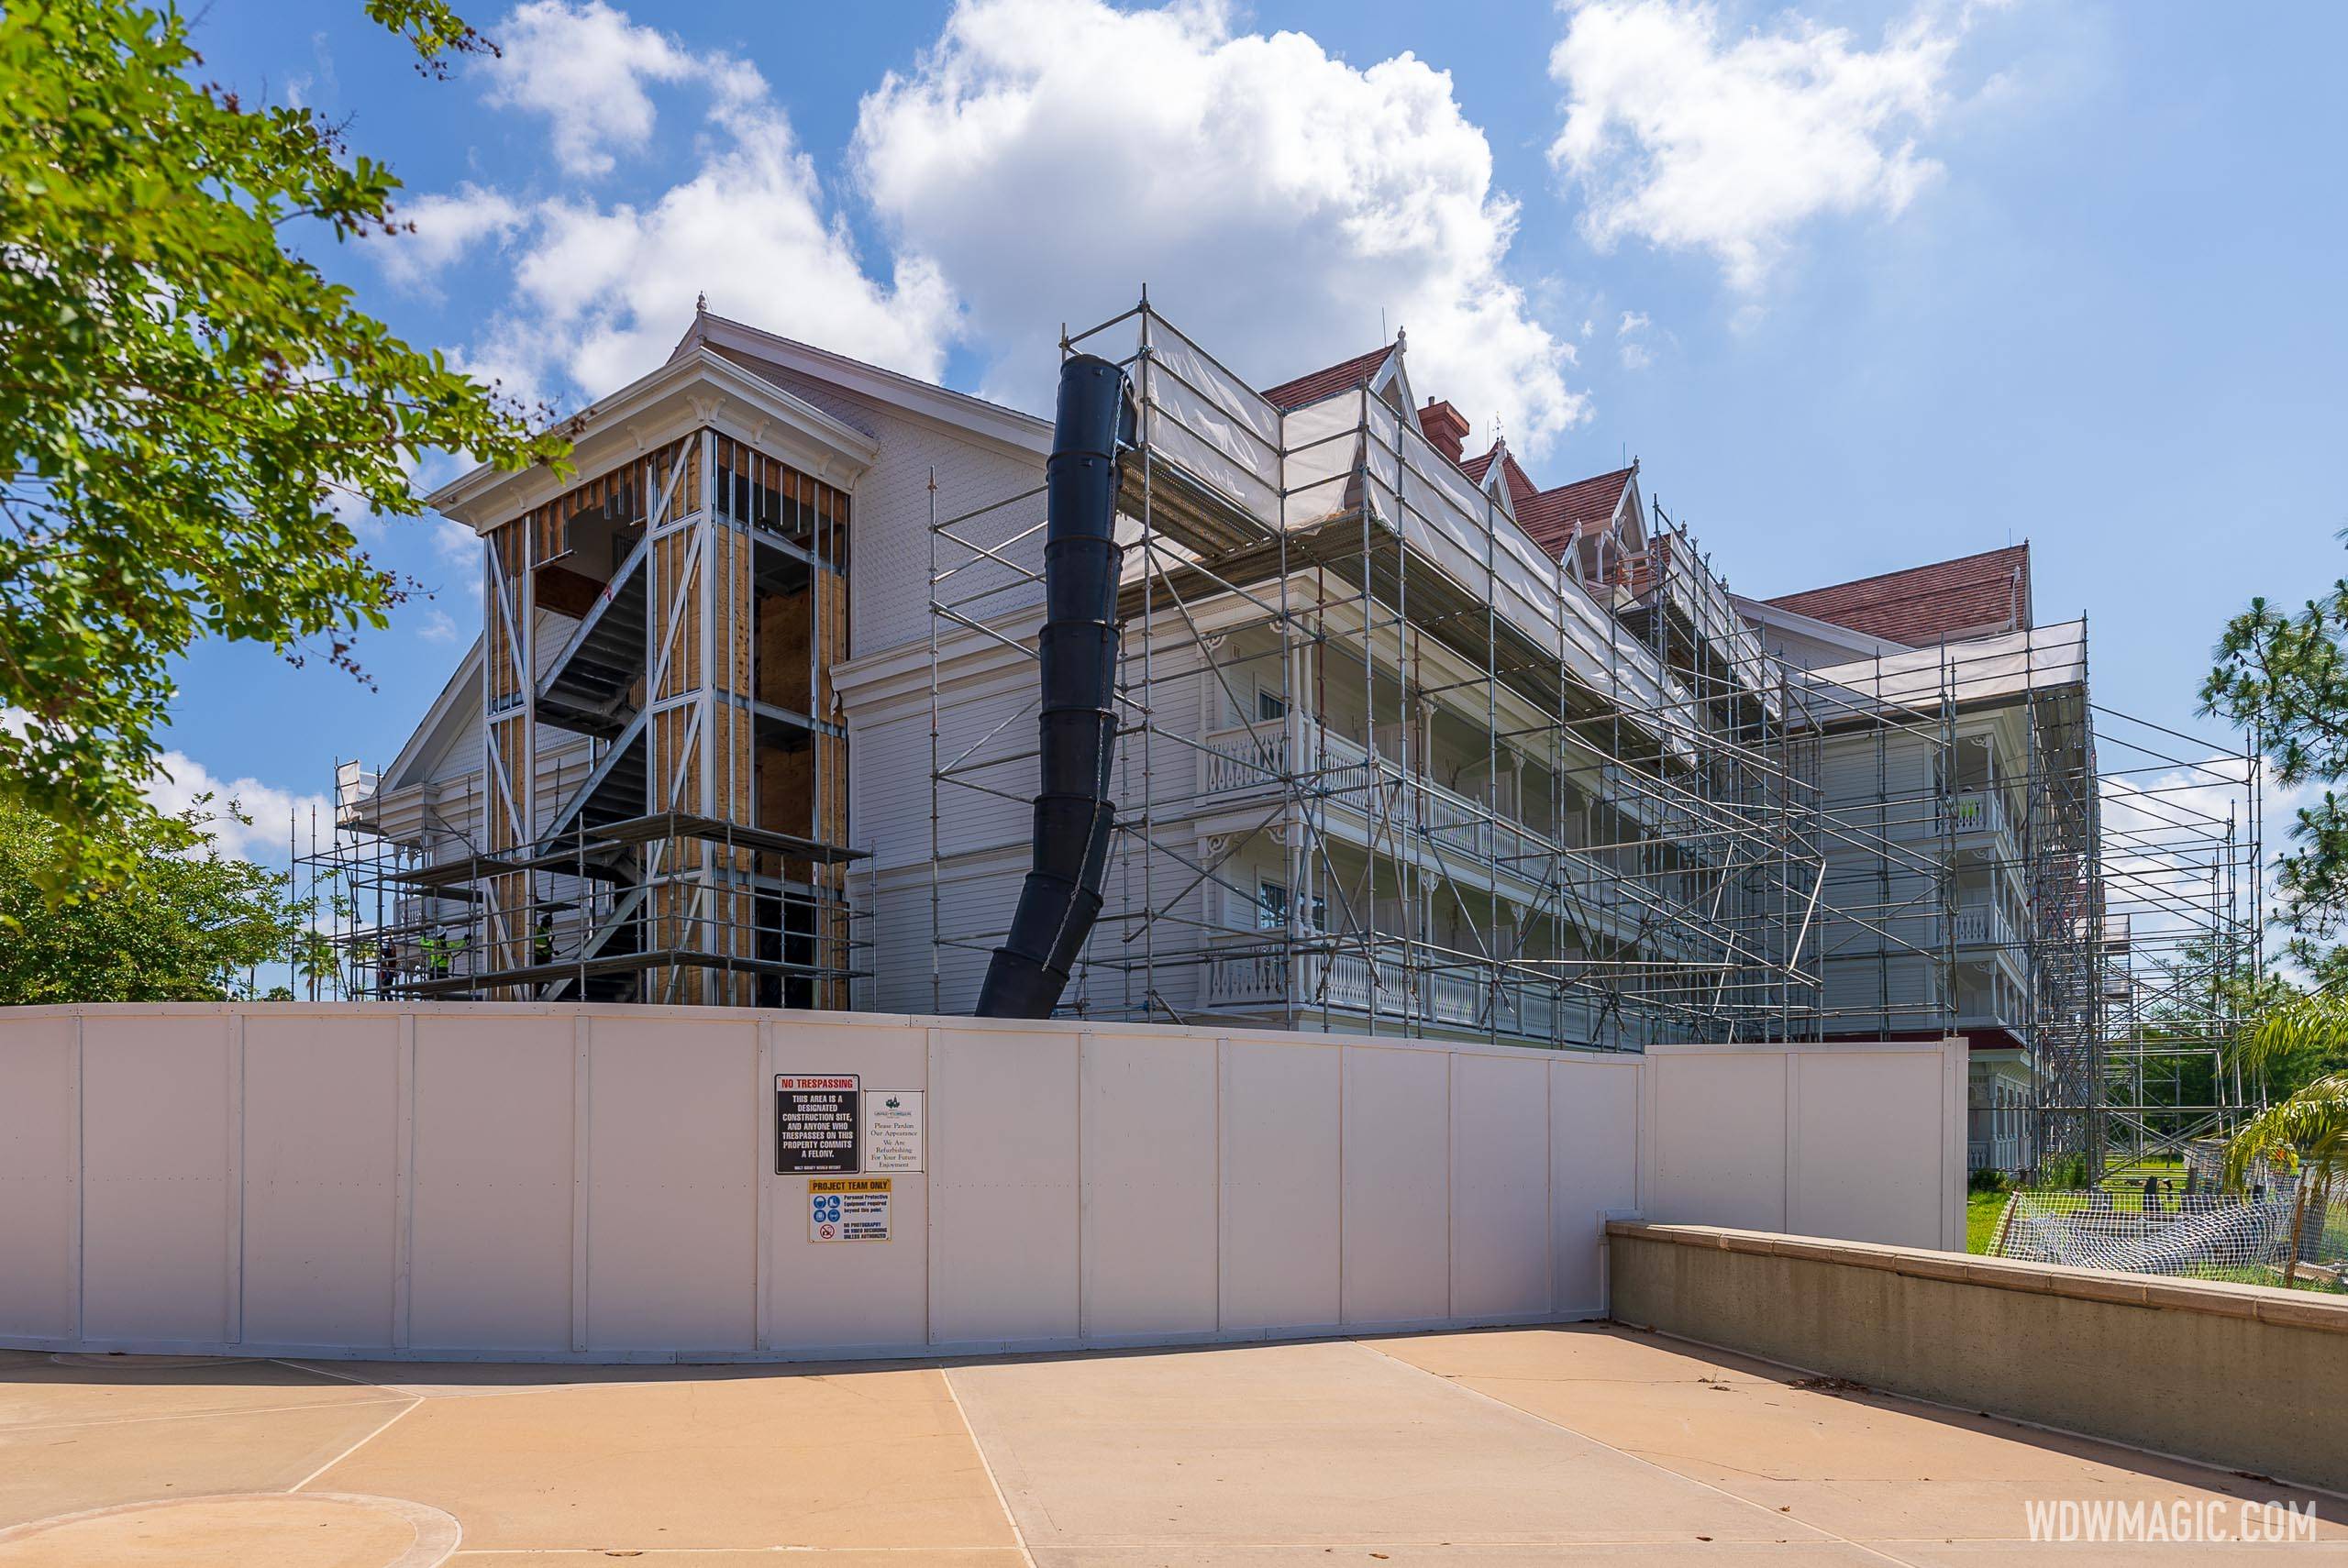 2022 DVC Villas construction at Disney's Grand Floridian Resort - May 18 2022